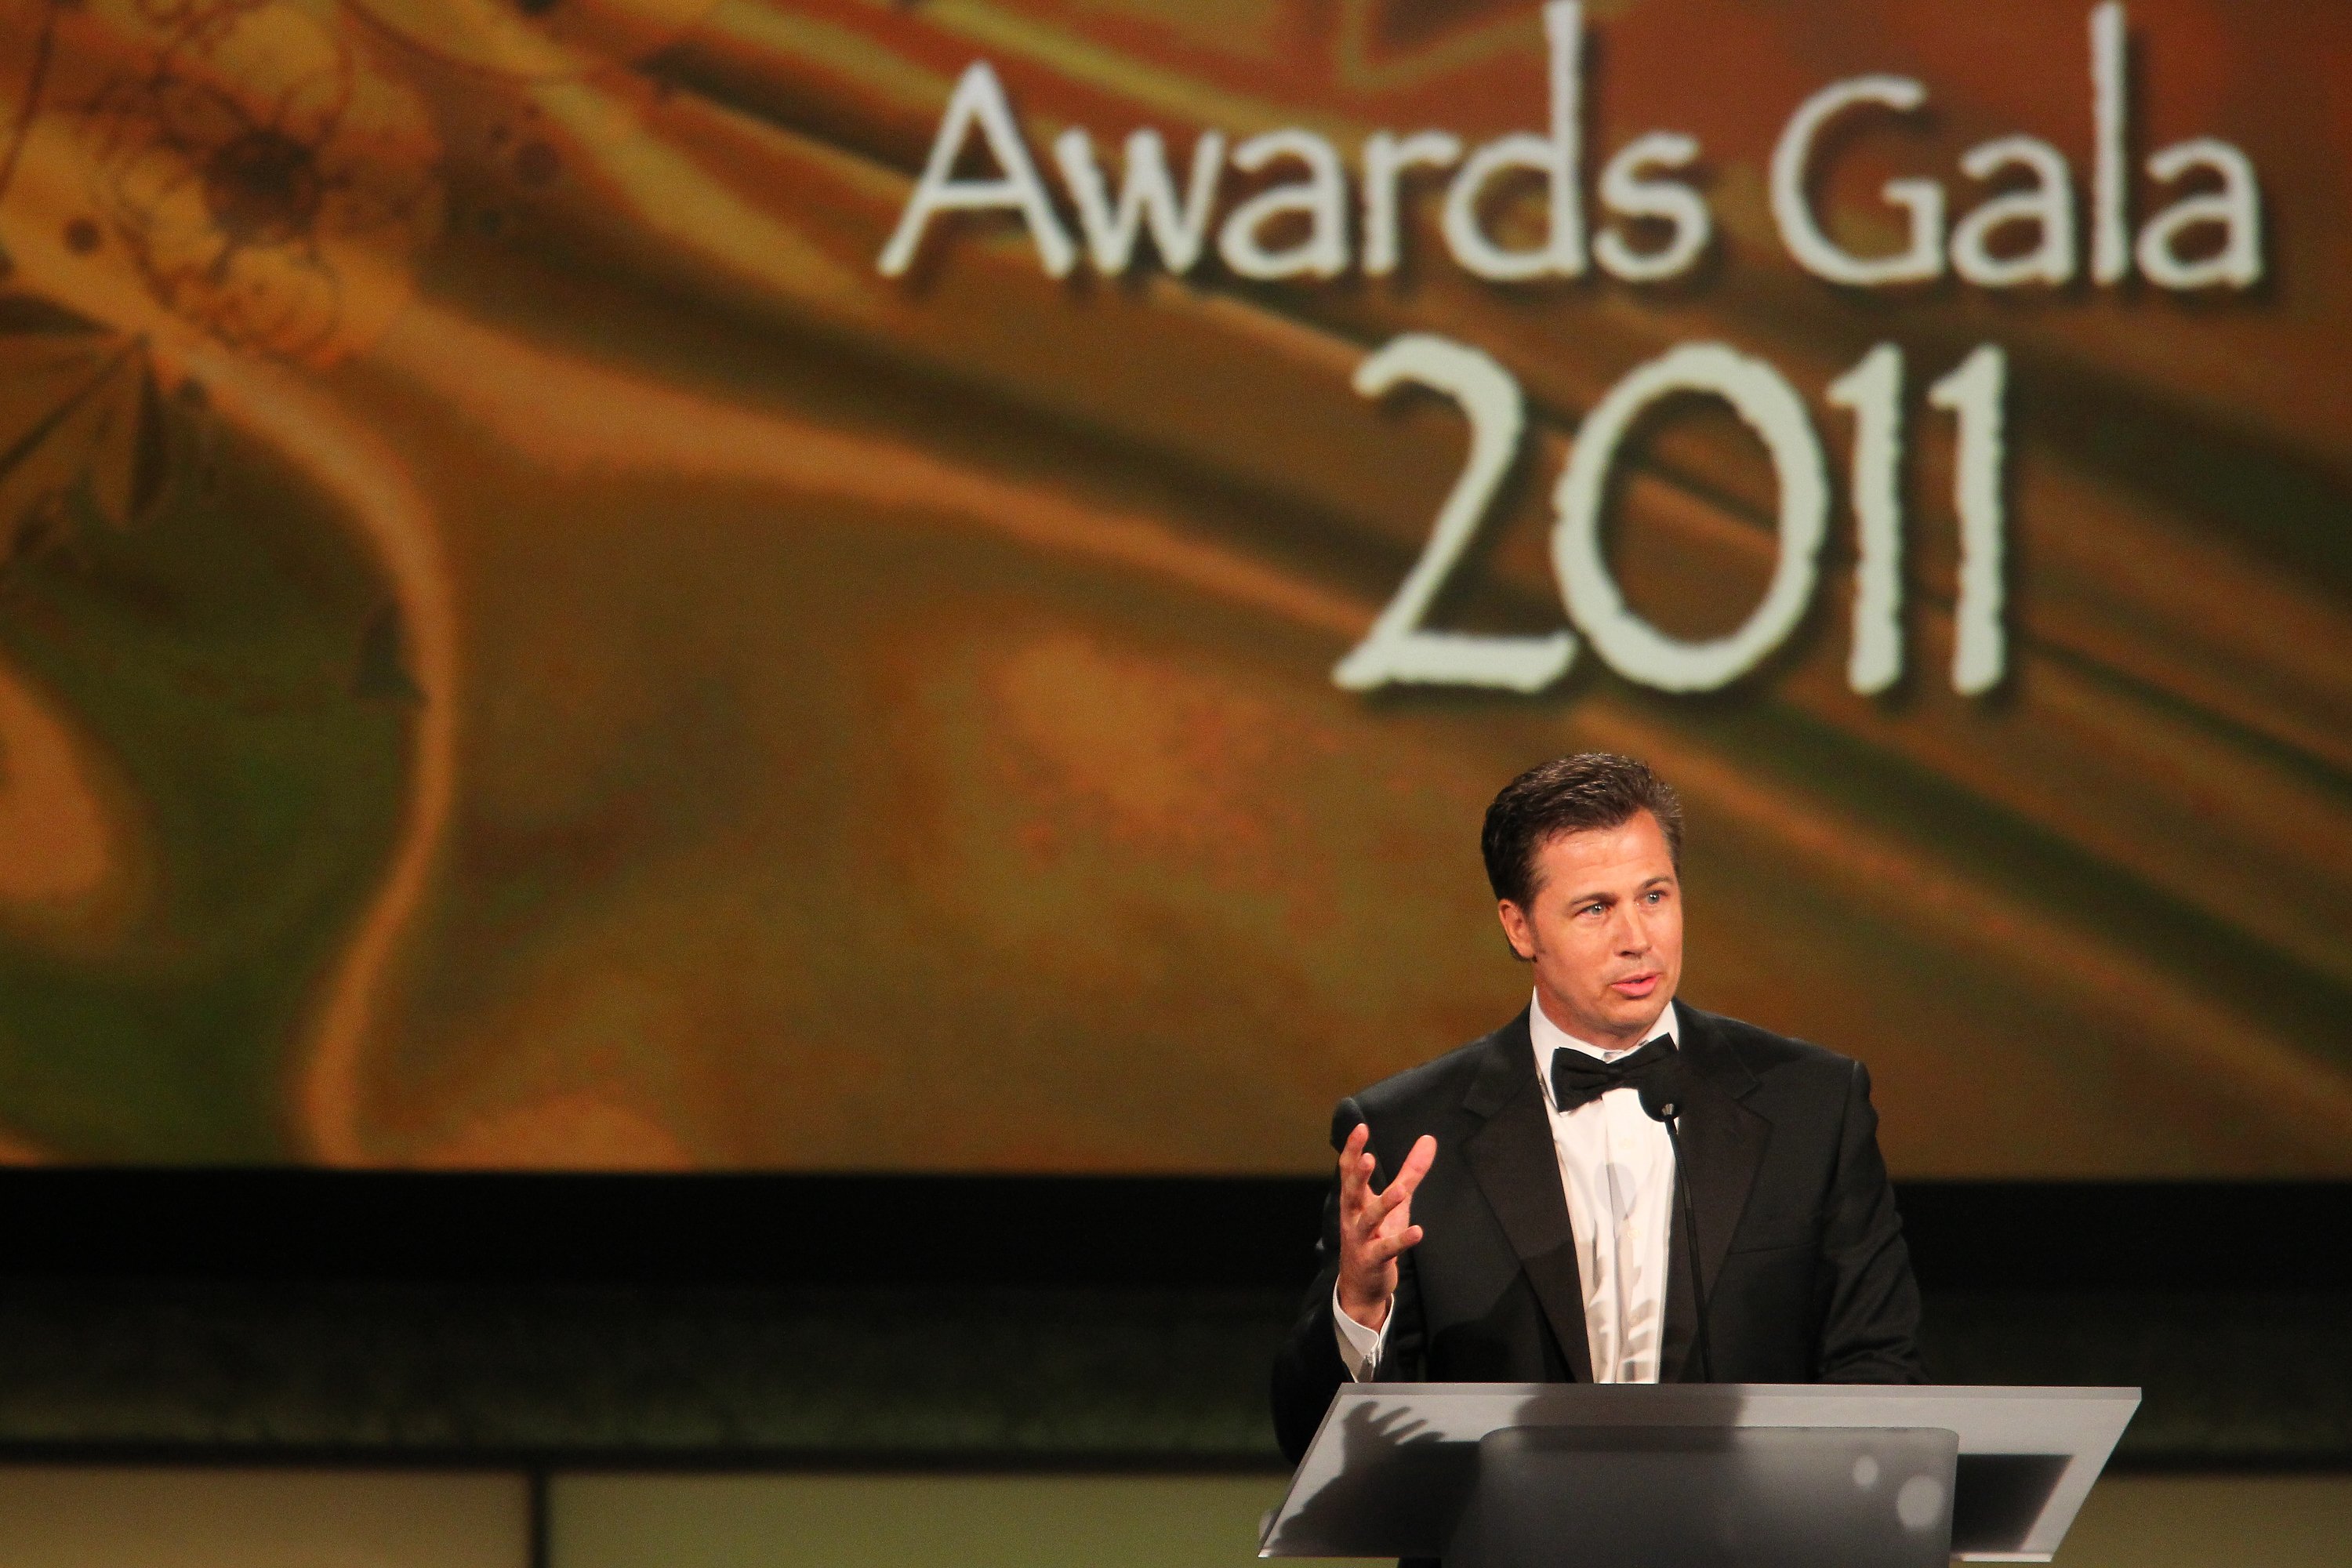 Doug Pitt at the Starkey Hearing Foundation's "So The World May Hear Awards Gala" 2011. | Source: Getty Images